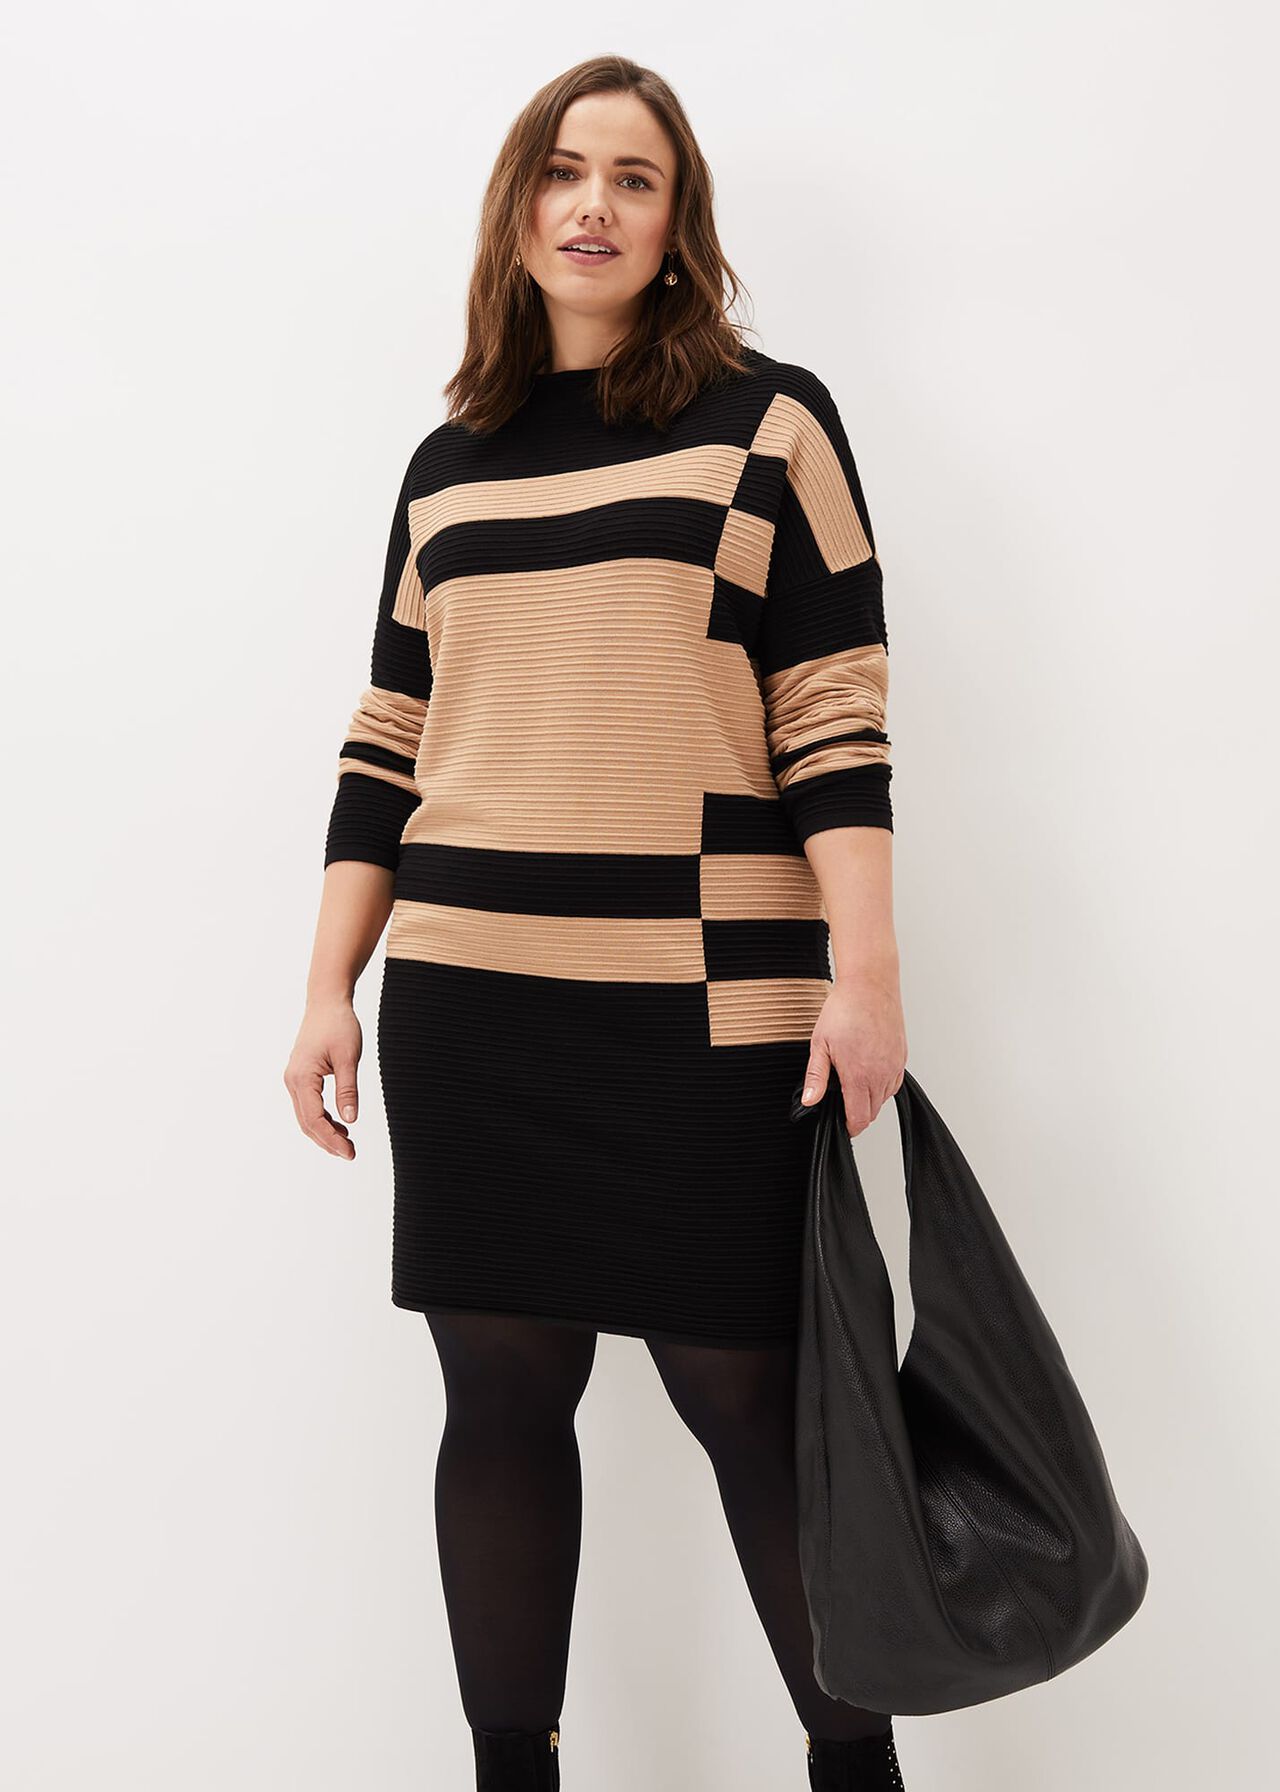 Azera Colourblock Textured Knit Dress